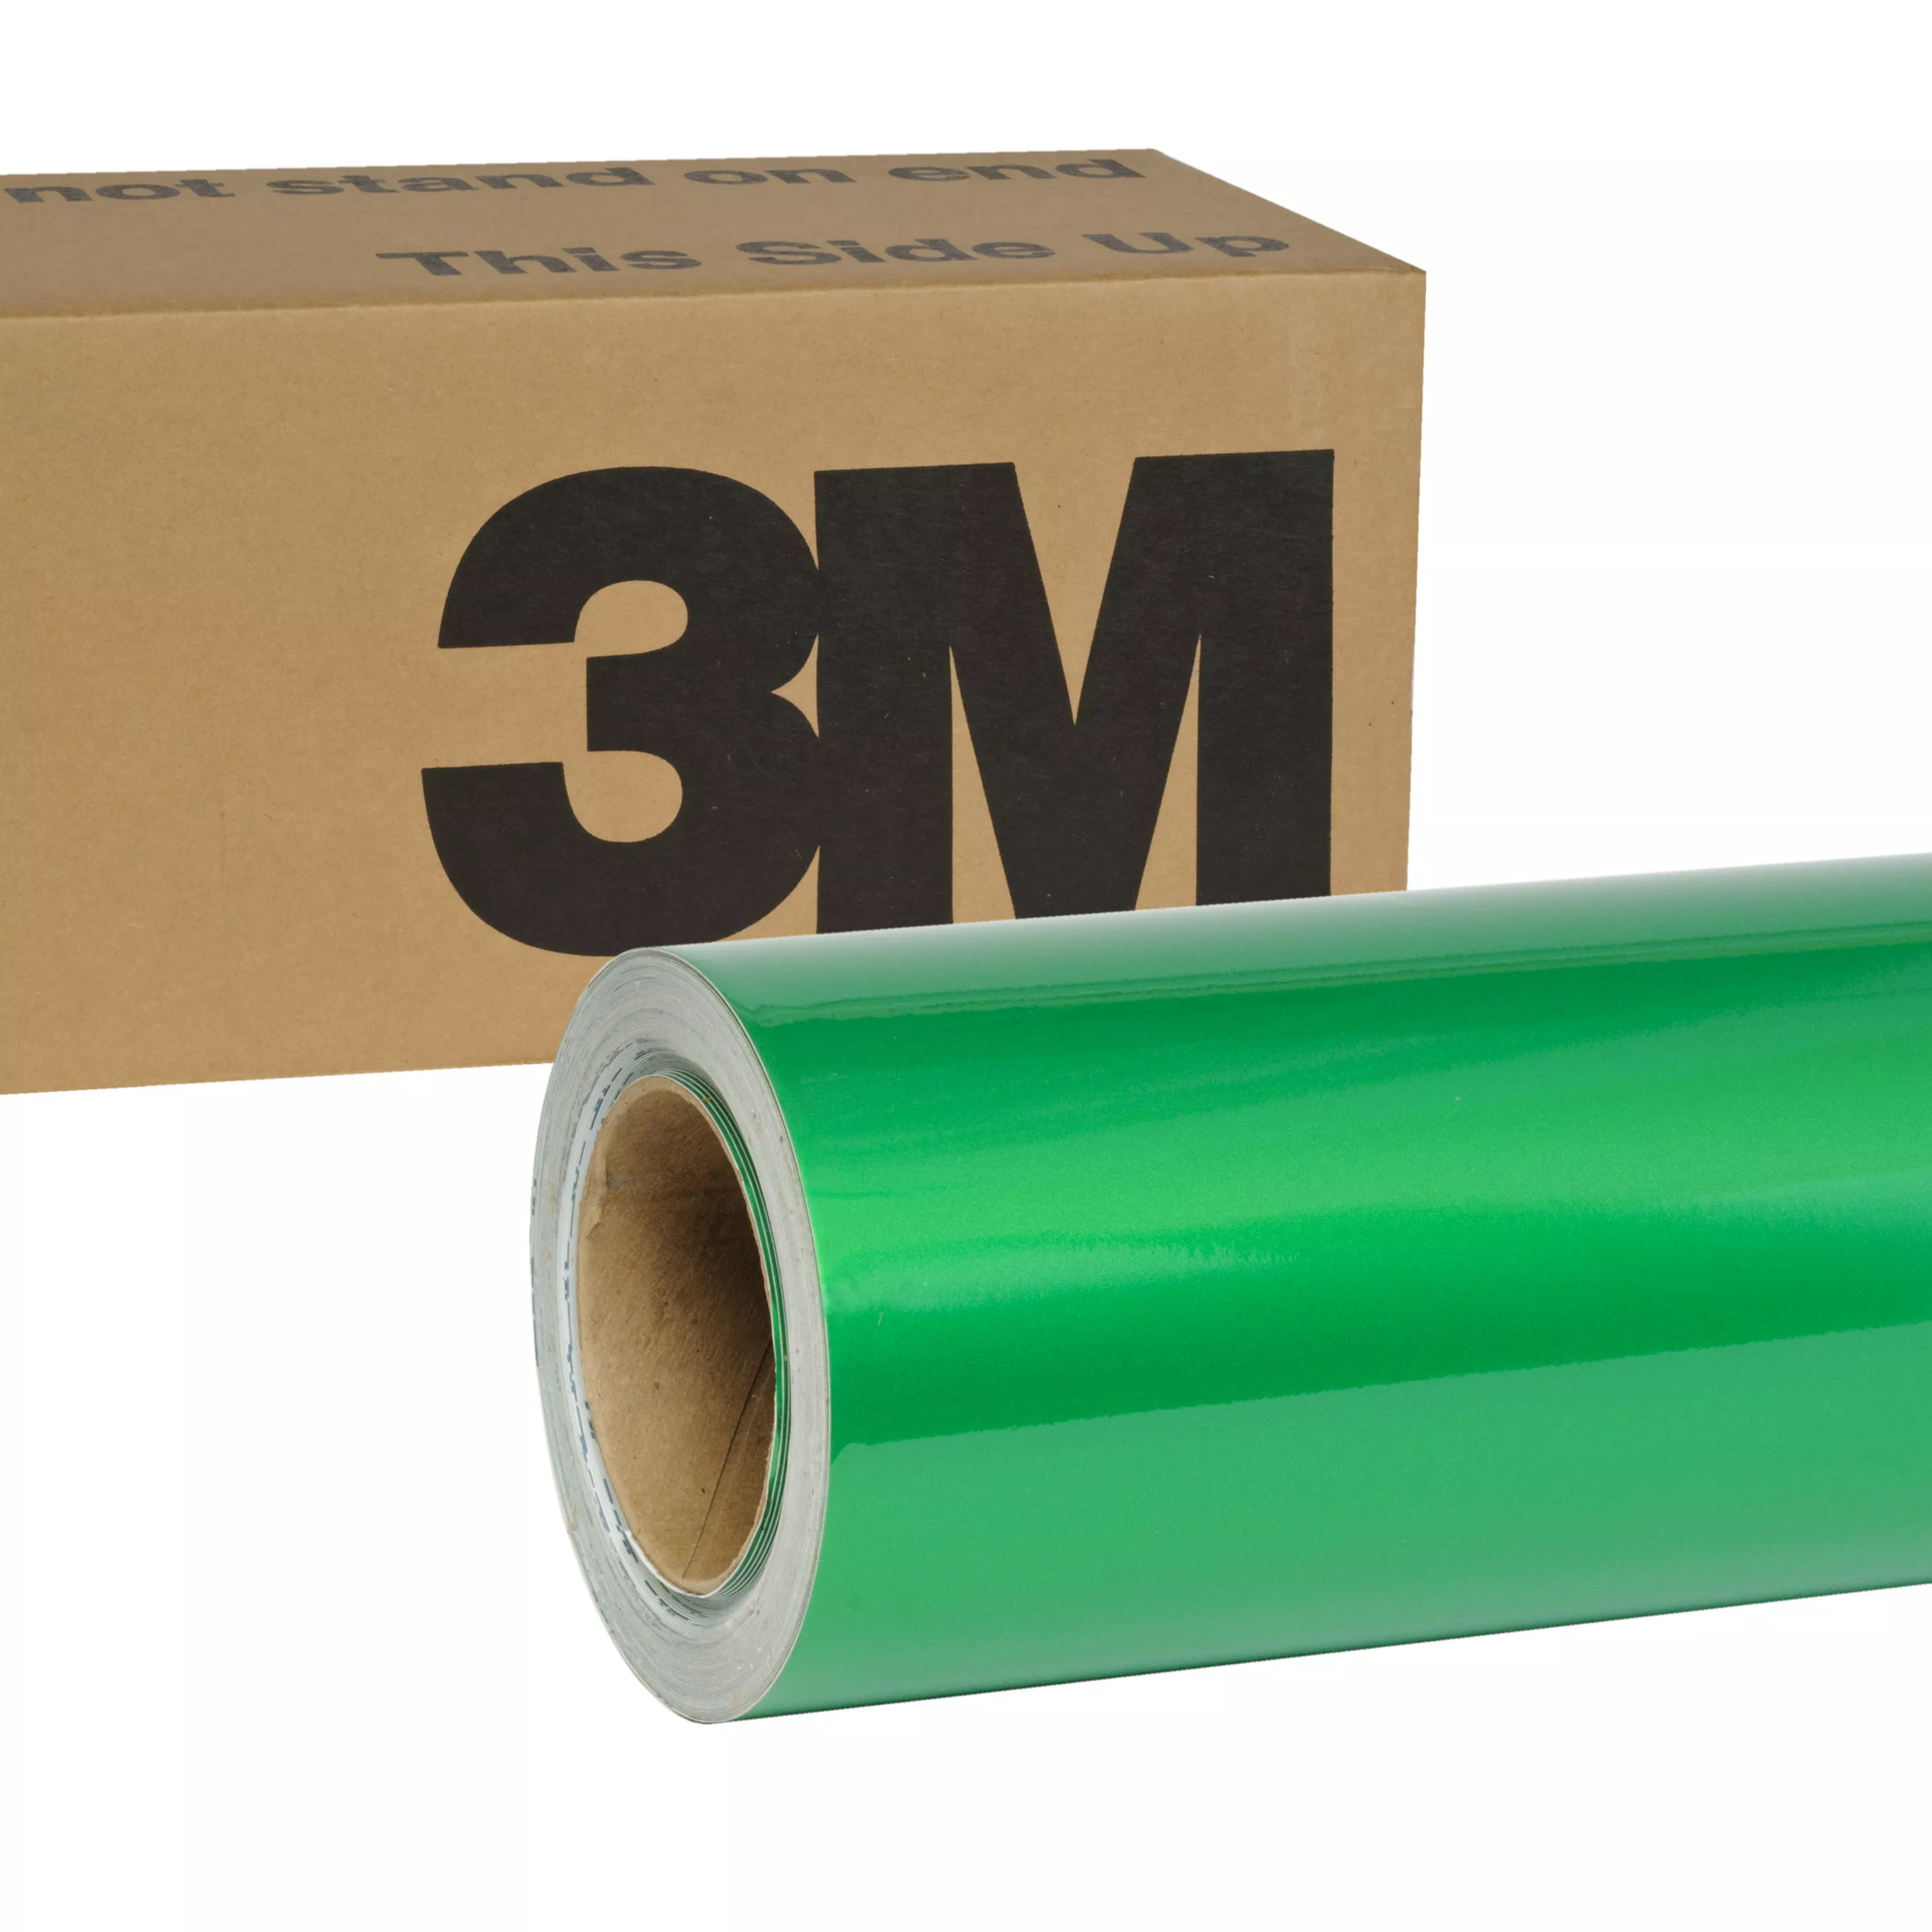 3M™ Wrap Film Series 1080-G336, Gloss Green Envy, 60 in x 10 yd